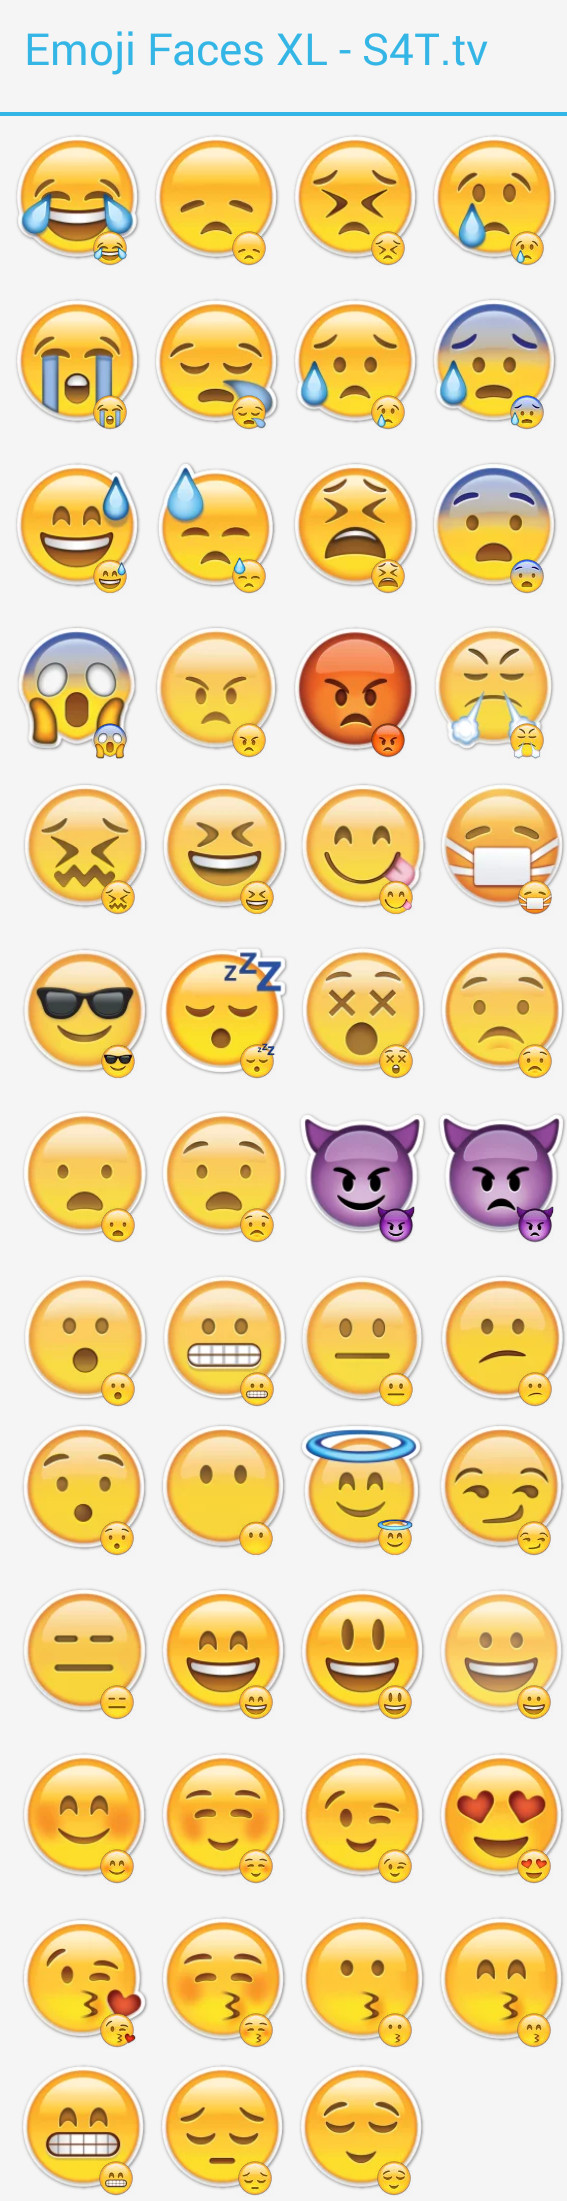 Faces Emoji XL